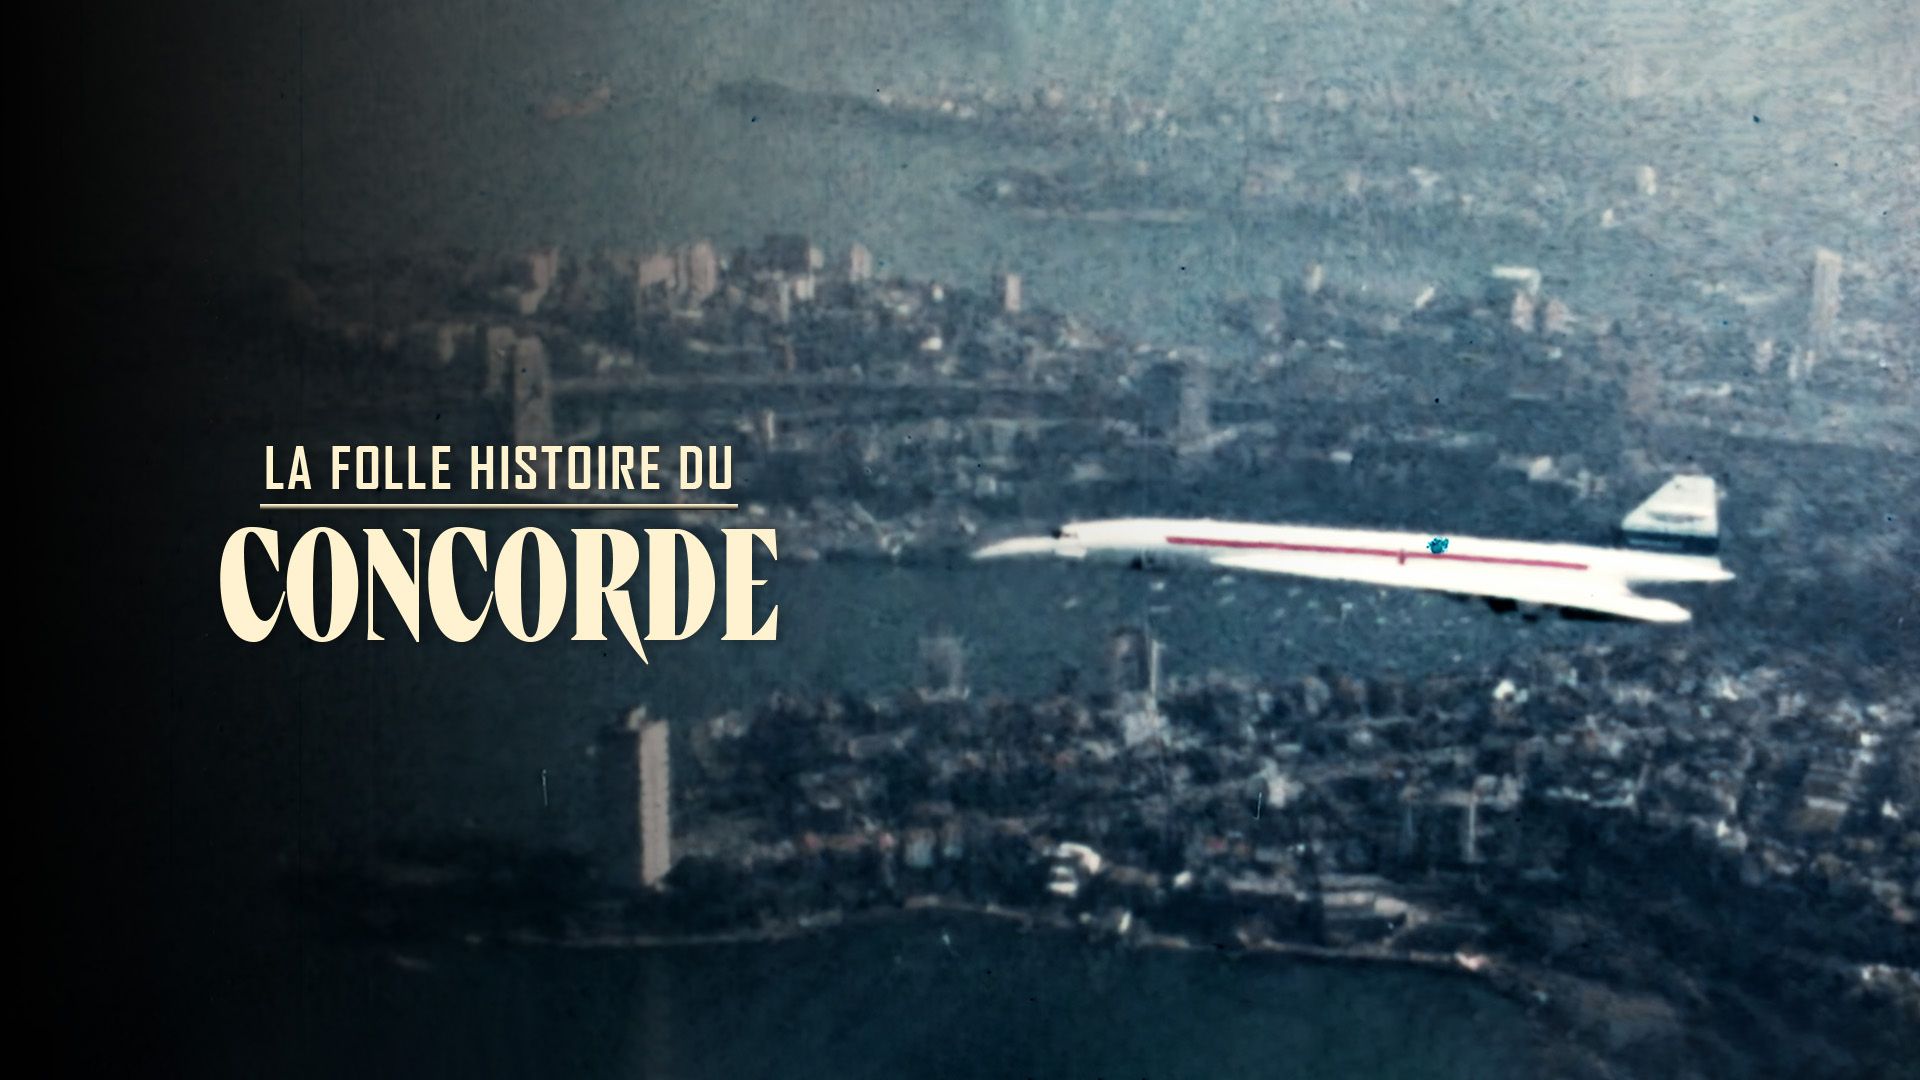 La folle histoire du Concorde